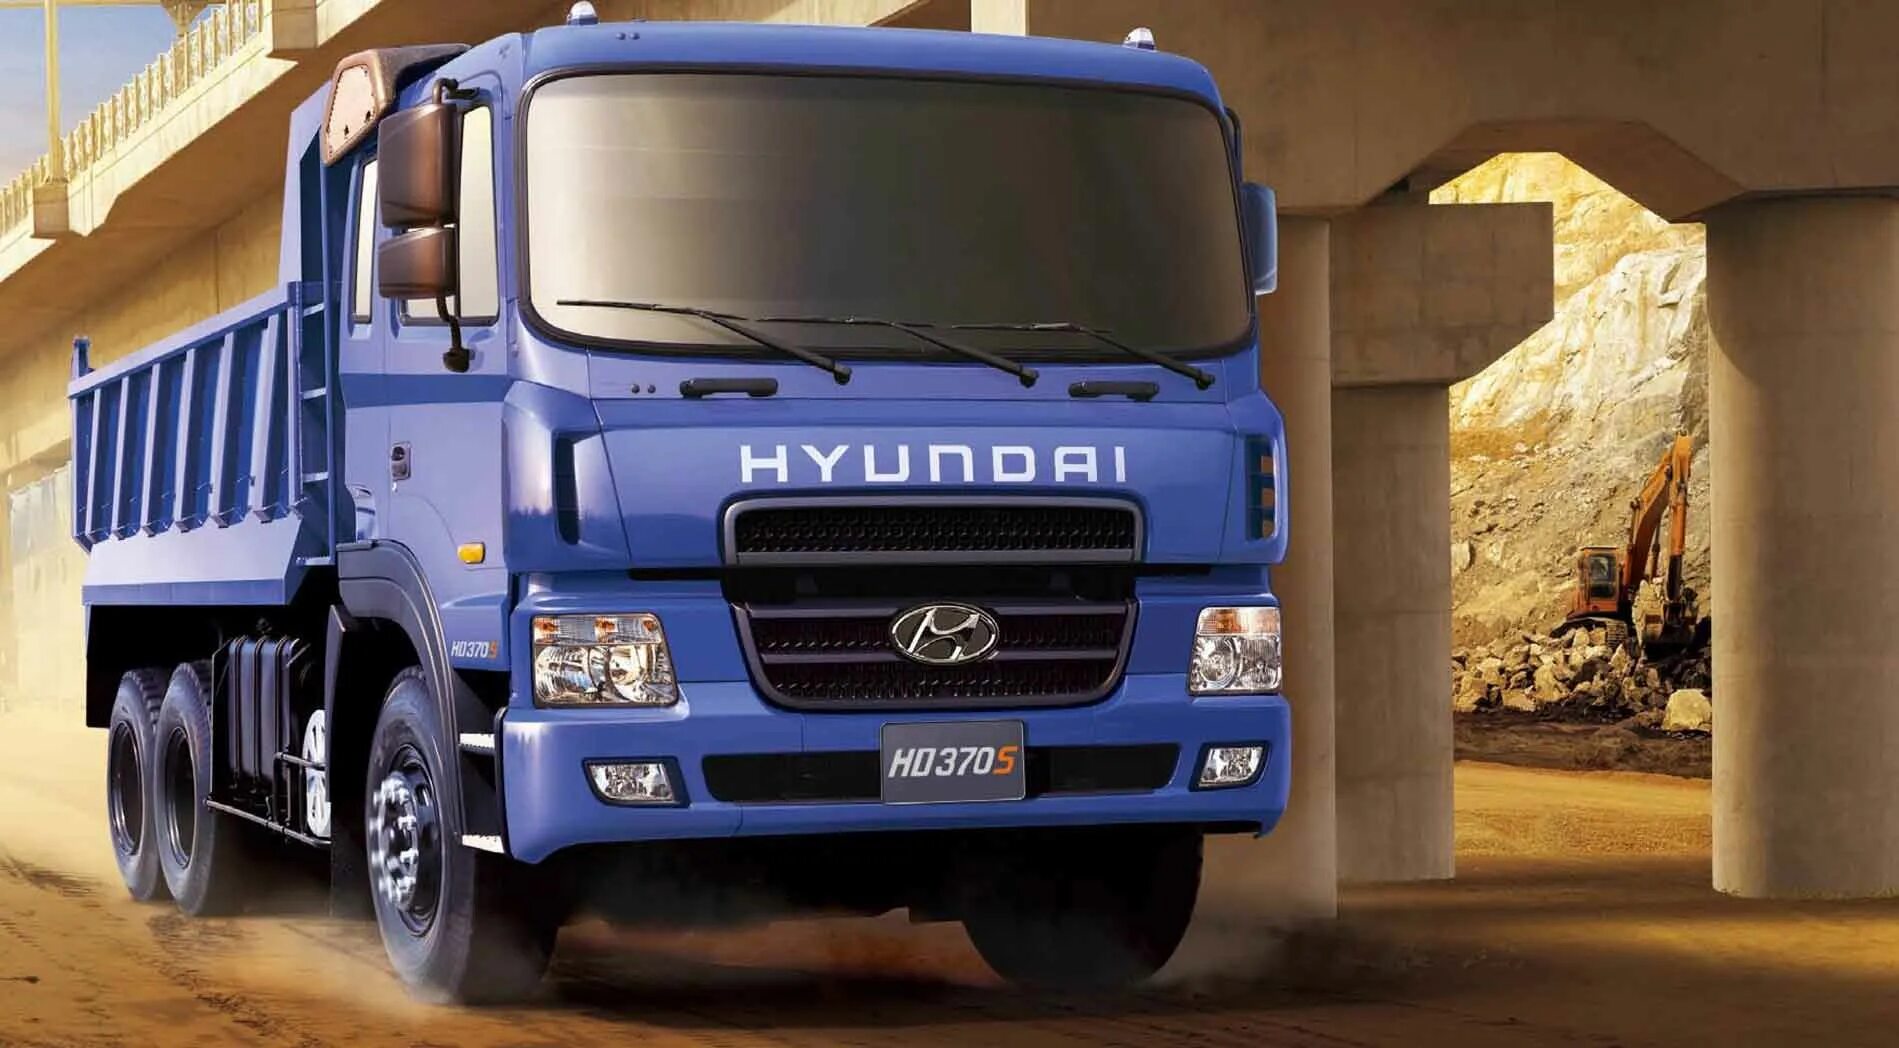 Хундай грузовик. Хундай hd270. Хендай HD 270. Hyundai HD 270 самосвал. Автомобиль Hyundai HD-270, грузовой самосвал,.